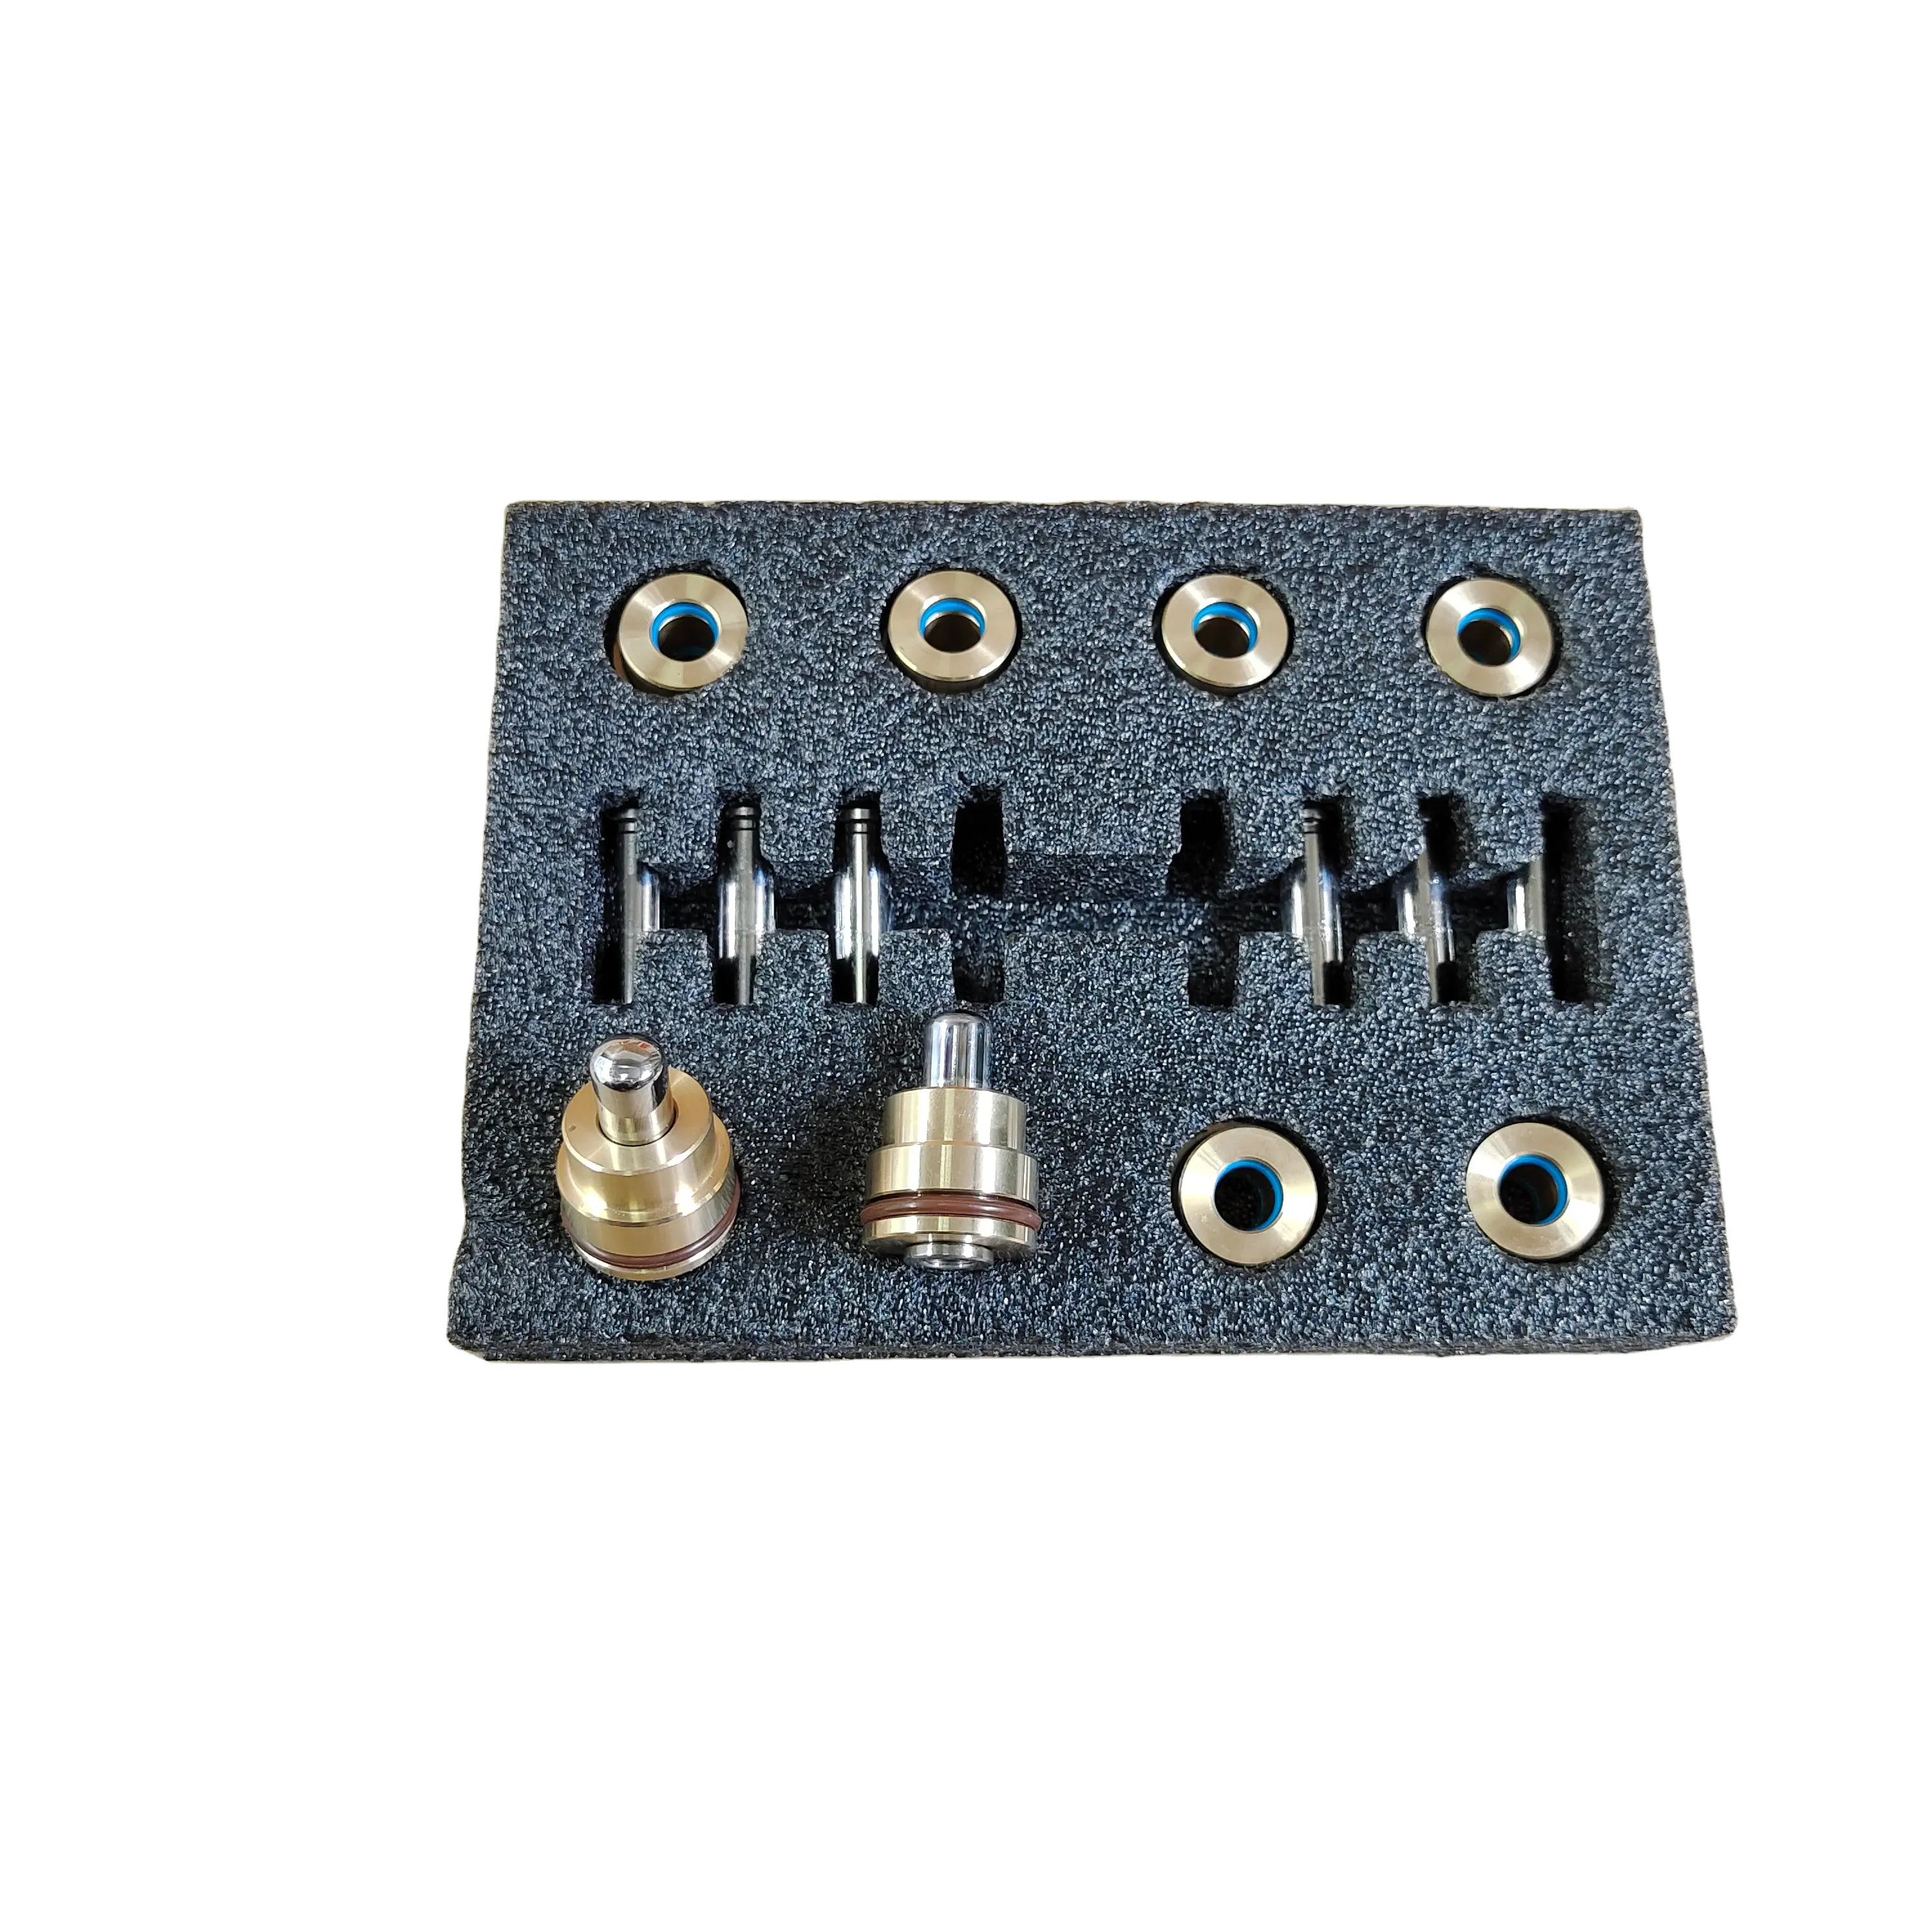 Joystick de Control remoto para excavadora, Kit repetidor de válvula piloto, DH220-5, DH225-7, DH220-7, DH225-9, DX225, DX225-7